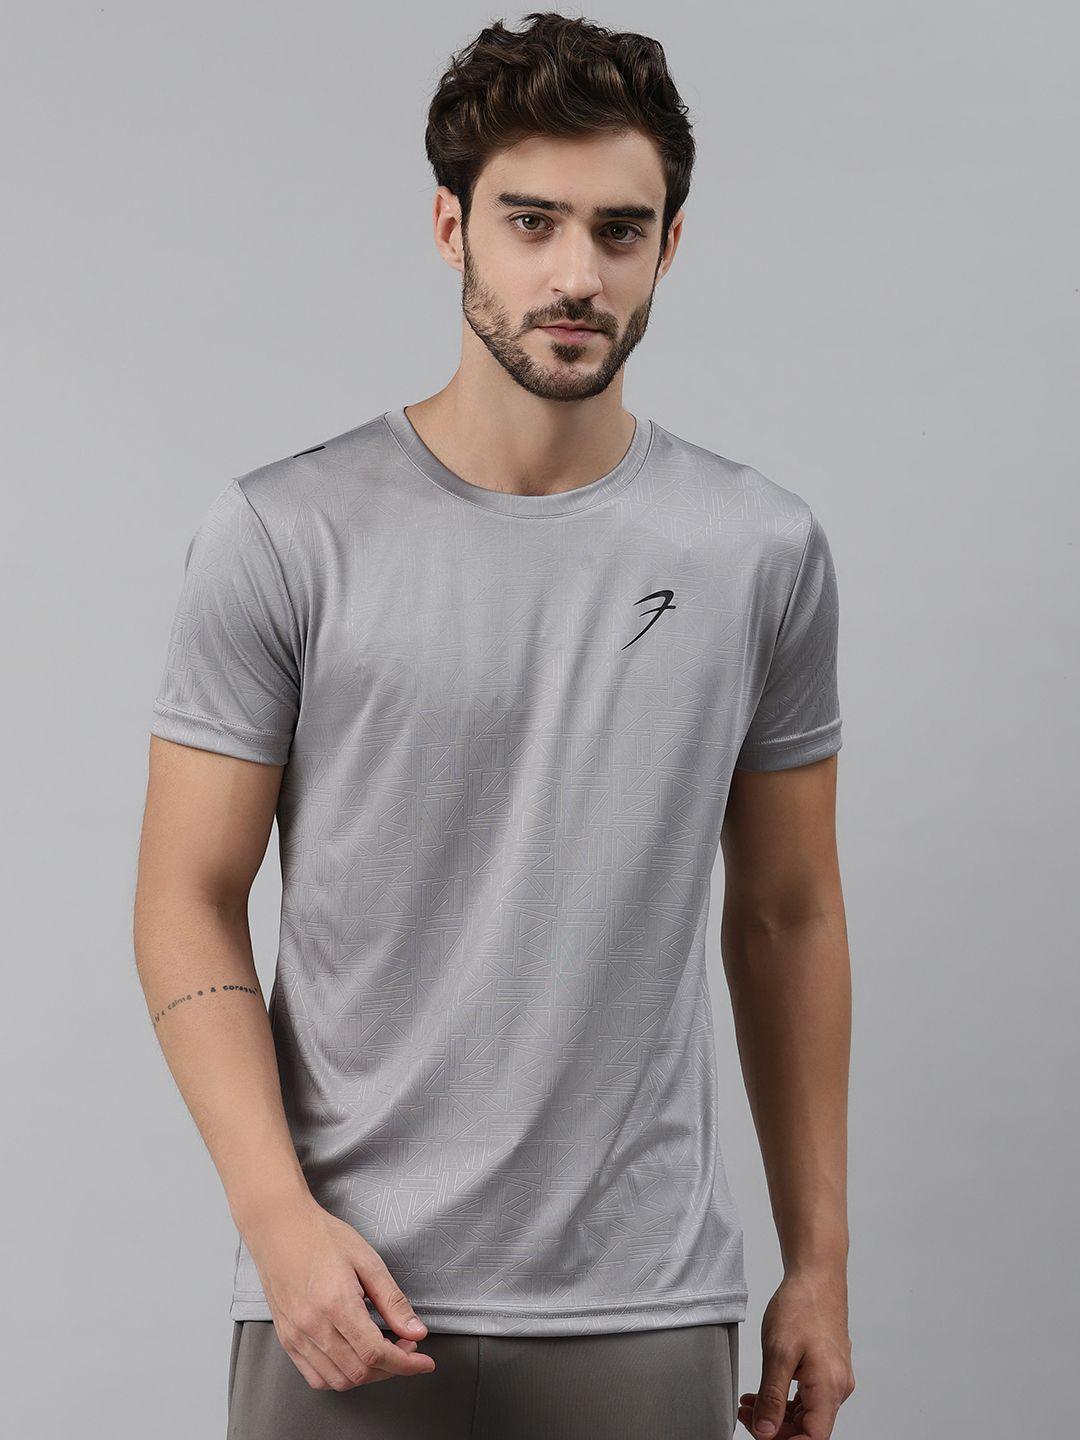 fuaark-men-grey-slim-fit-geometric-print-round-neck-training-t-shirt